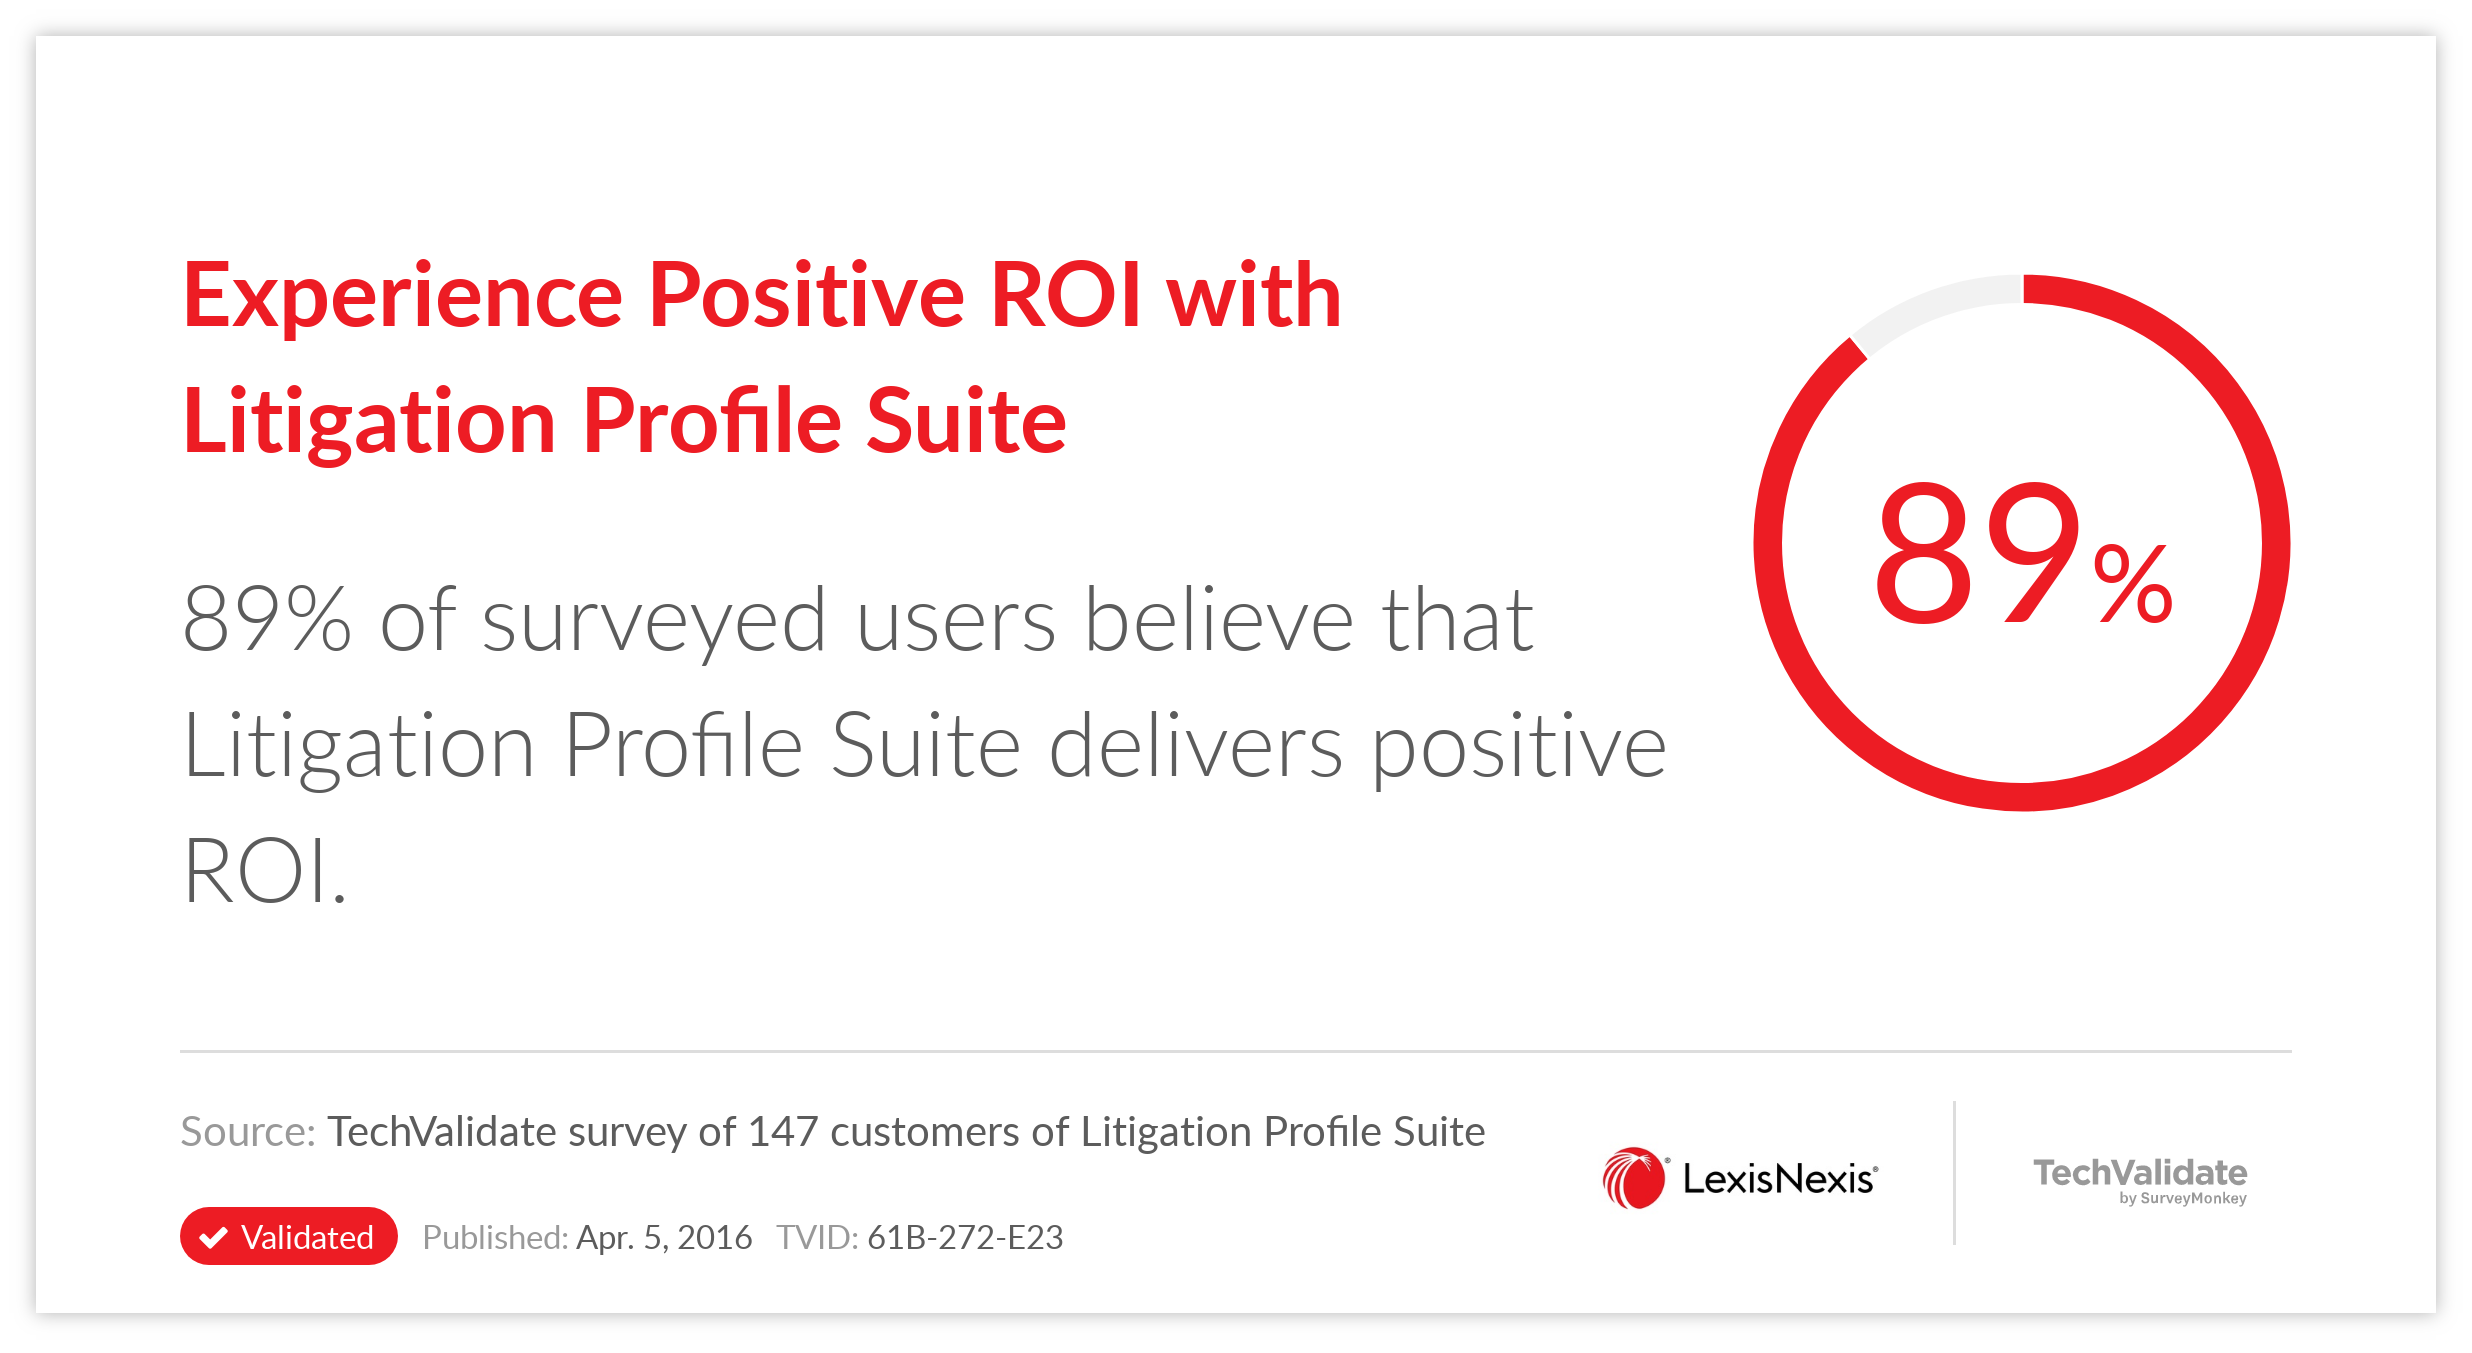 Experience Positive ROI with Litigation Profile Suite